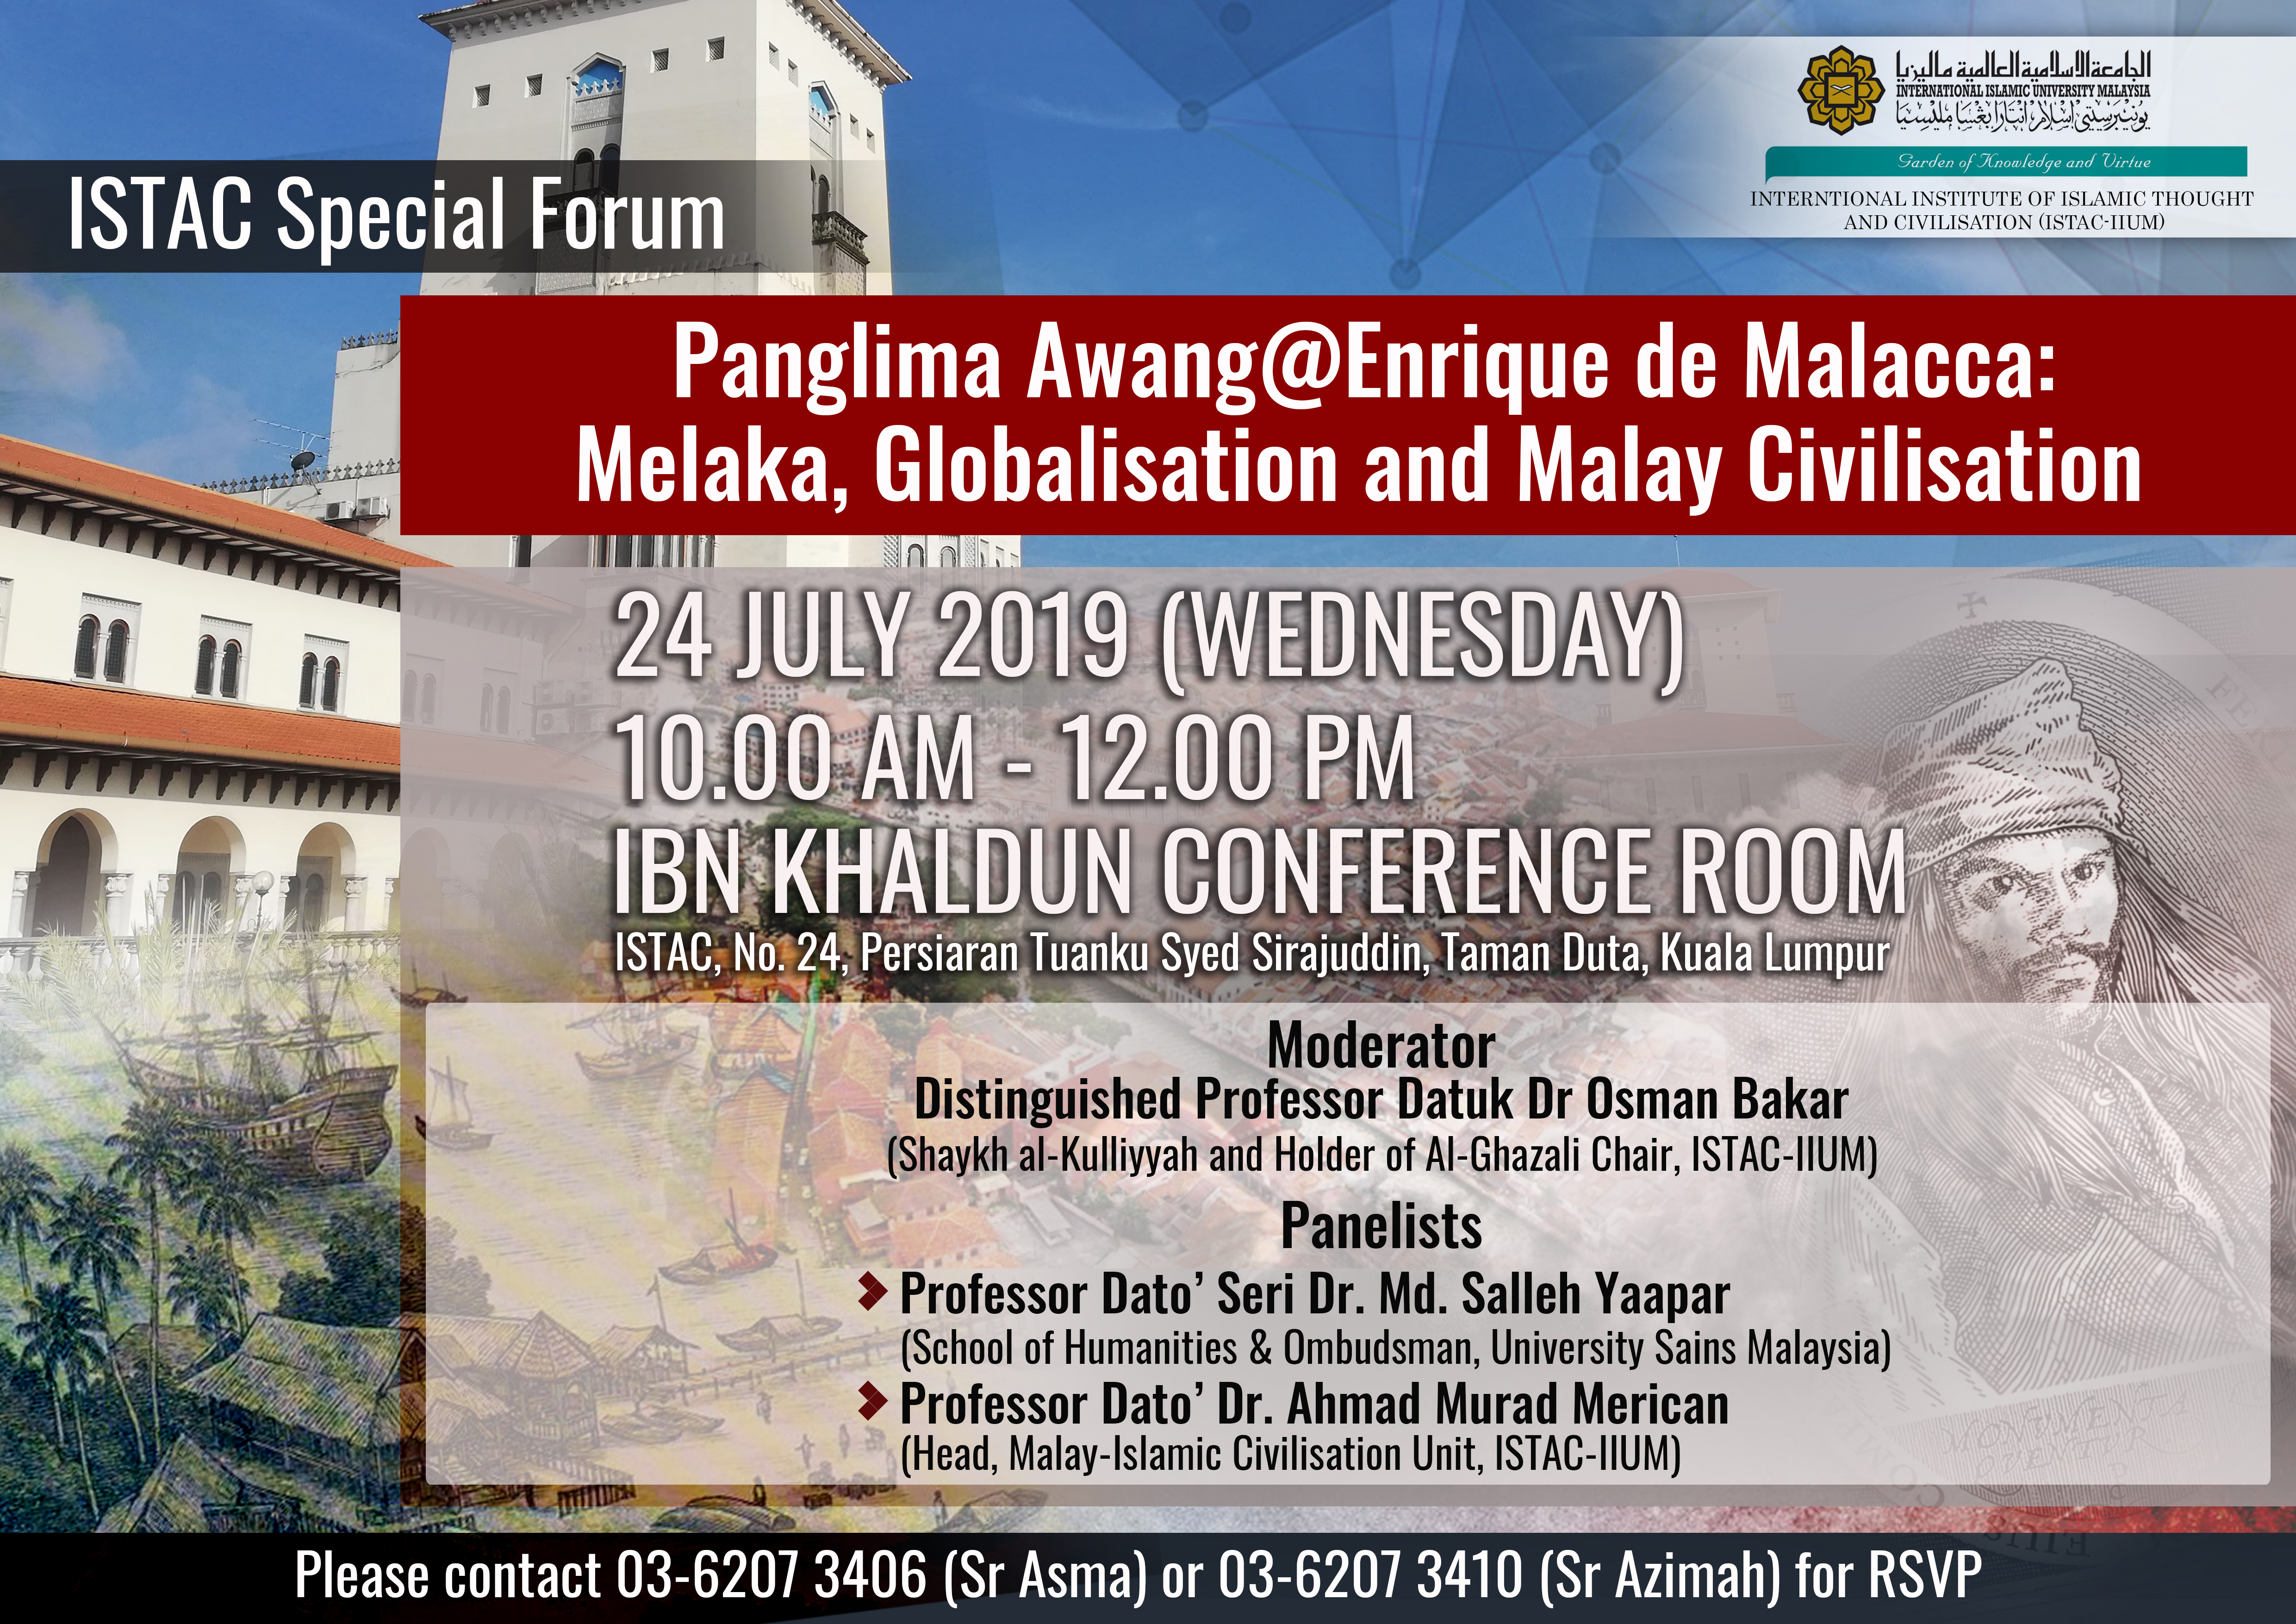 ISTAC SPECIAL FORUM: Panglima Awang@Enrique de Malacca: